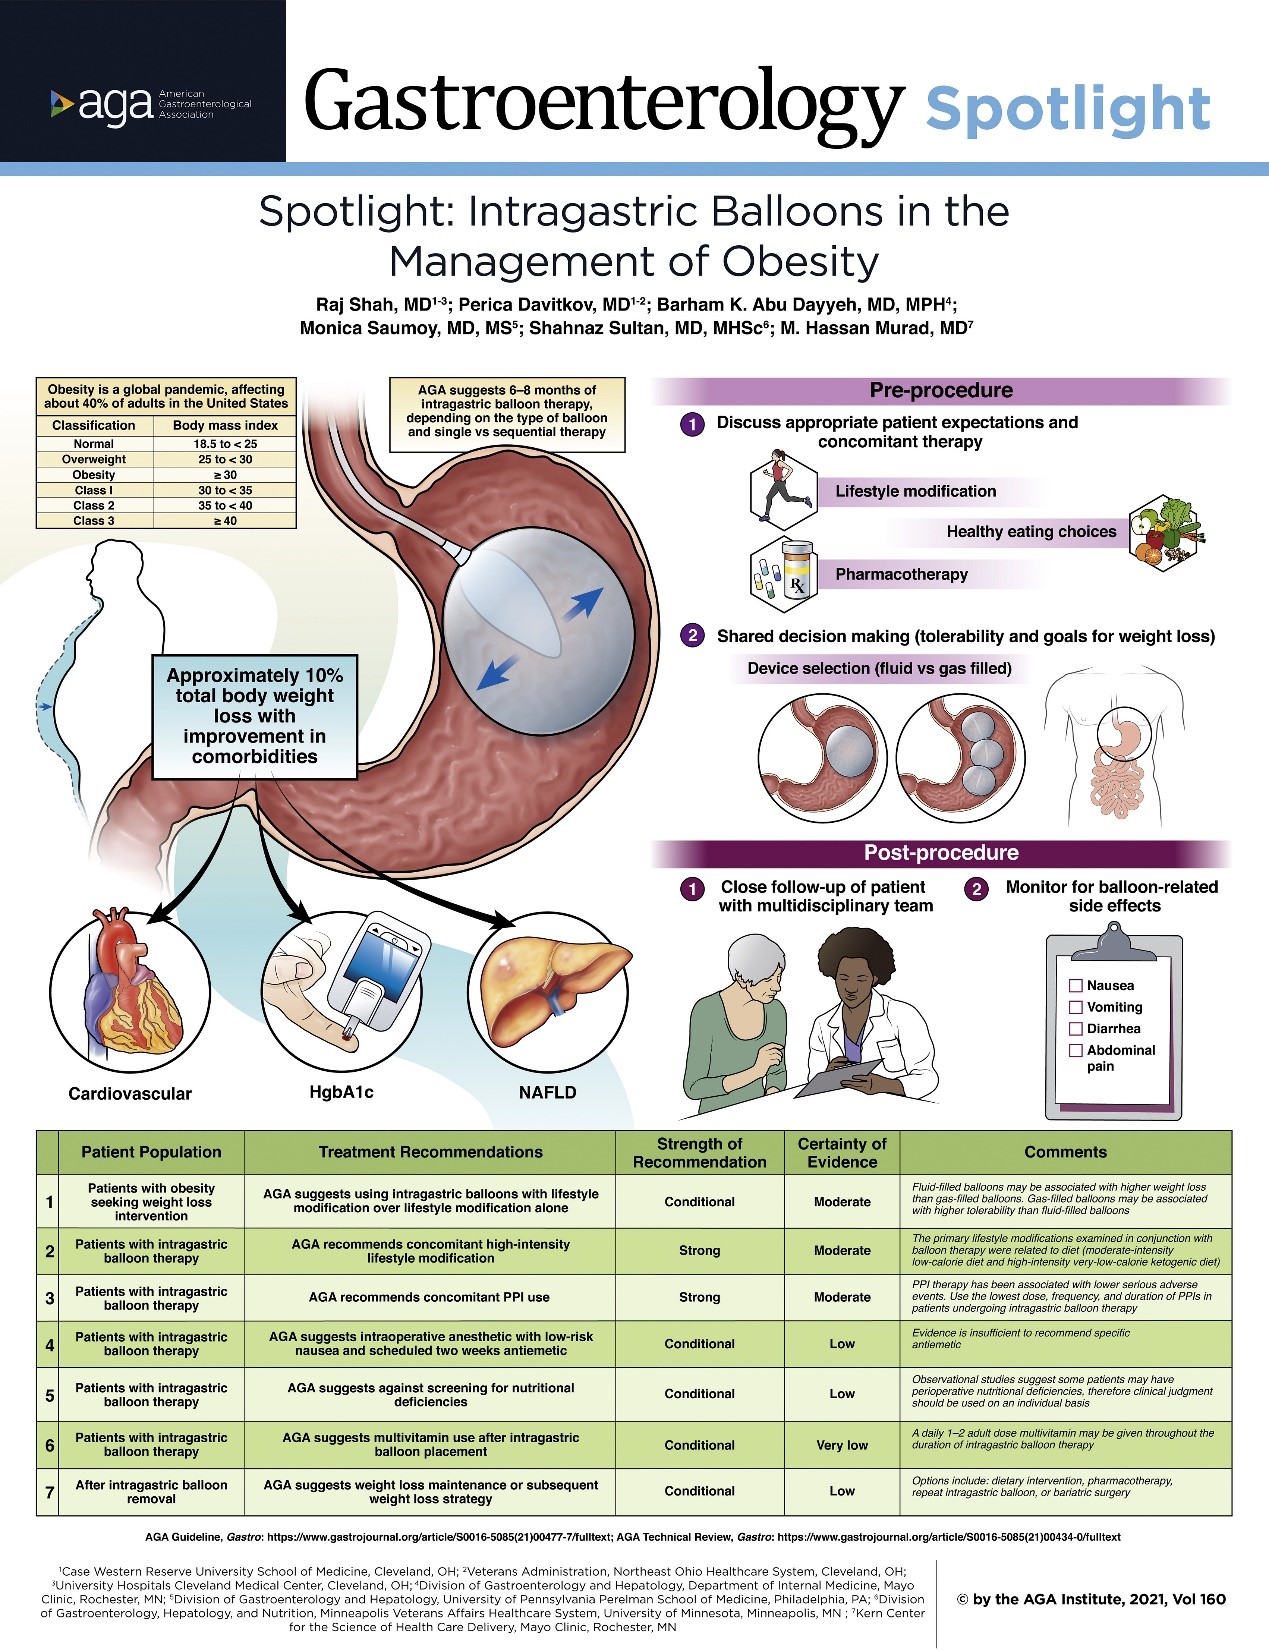 Gastroenterology：美国胃肠病学协会发布有关使用胃内球囊治疗肥胖症的正式建议